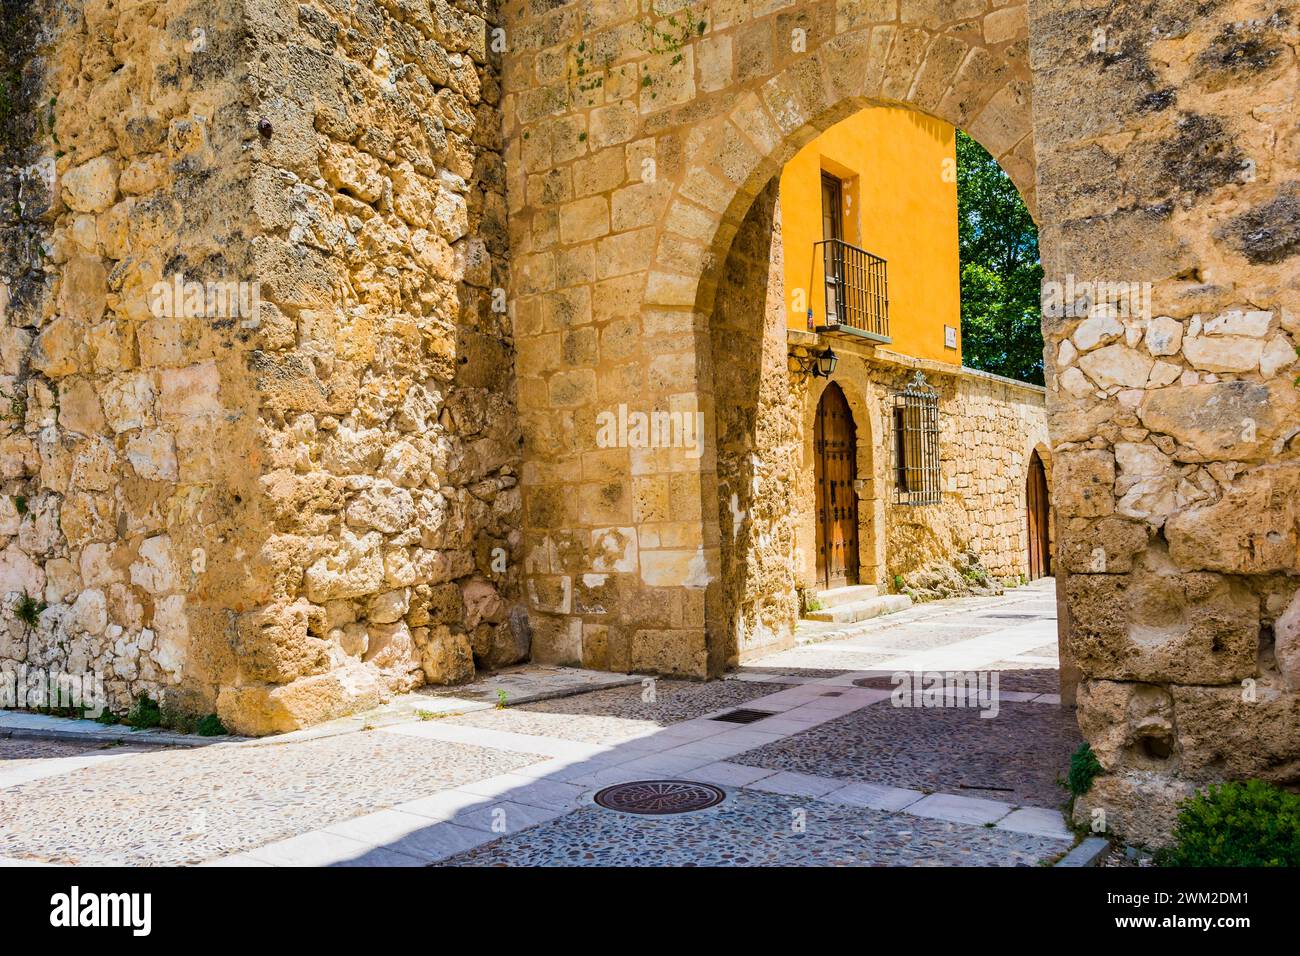 Gate of Juego de Pelota or Medieval Gate of Santa María en la Plaza Manu Leguineche. Brihuega, La Alcarria, Guadalajara, Castilla La Mancha, Spain, Eu Stock Photo